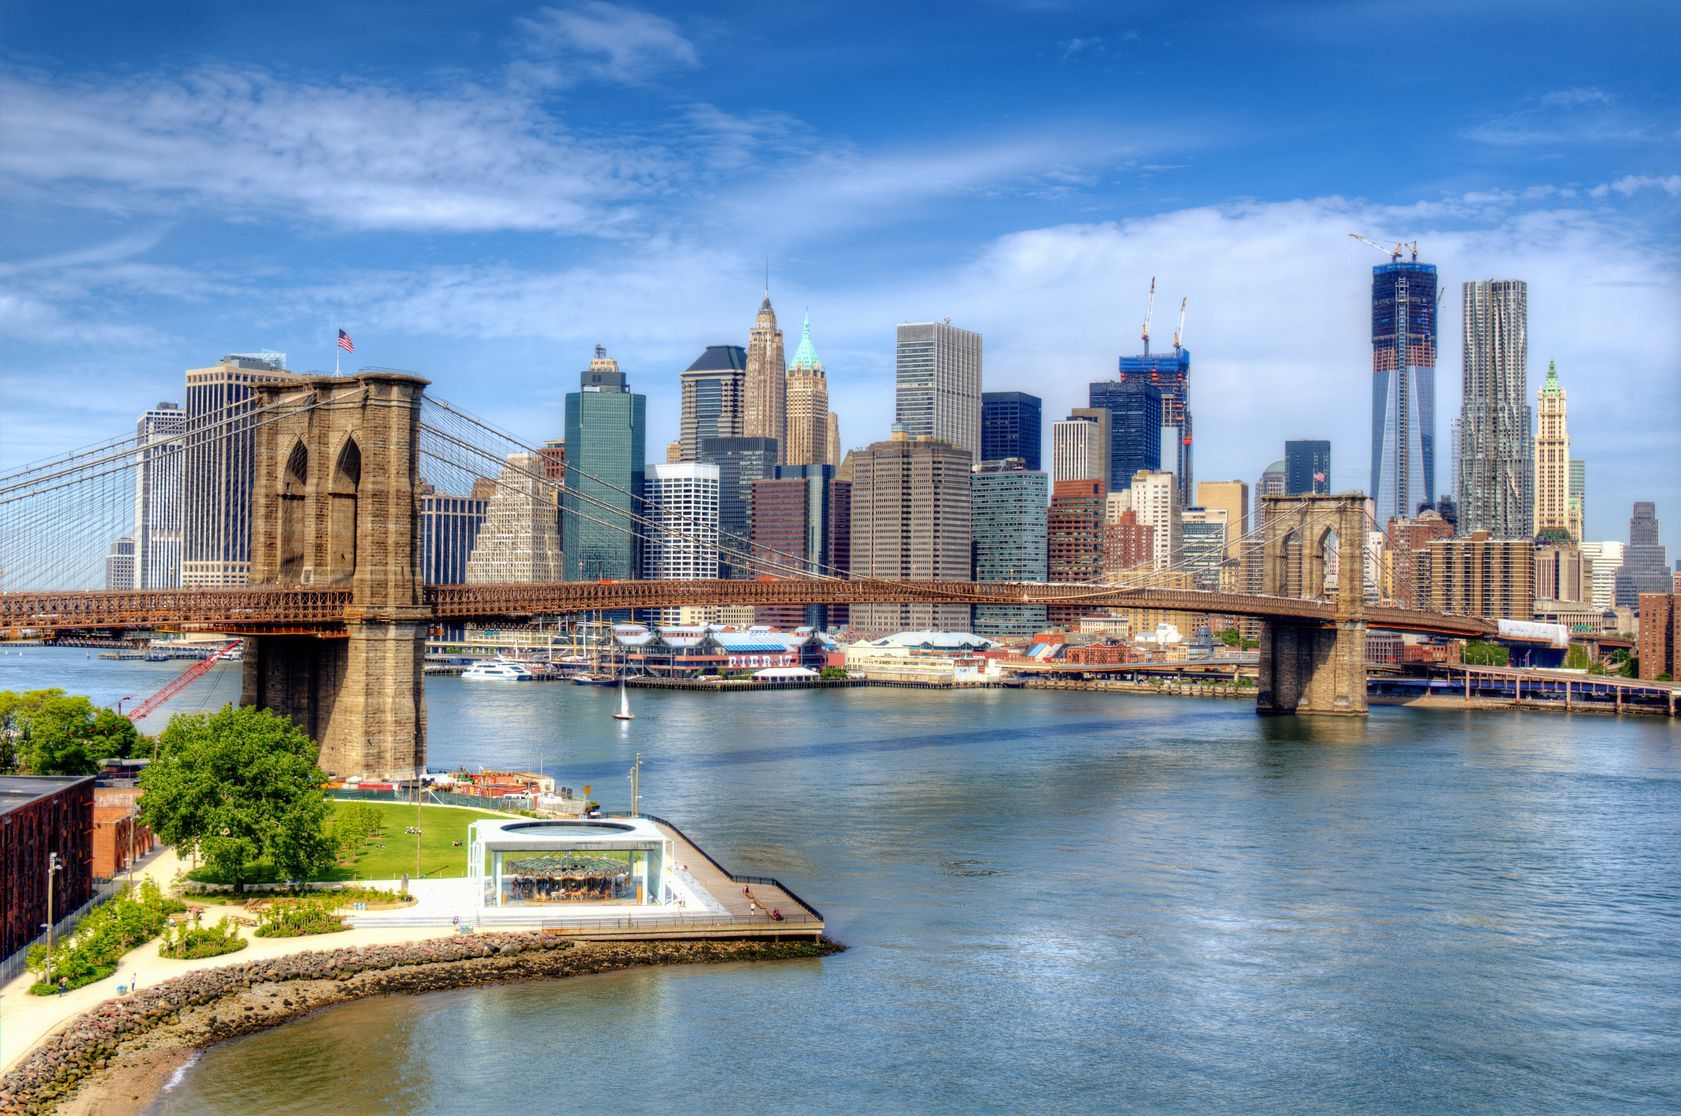 Populární Brooklyn Bridge v New Yorku | sepavo/123RF.com